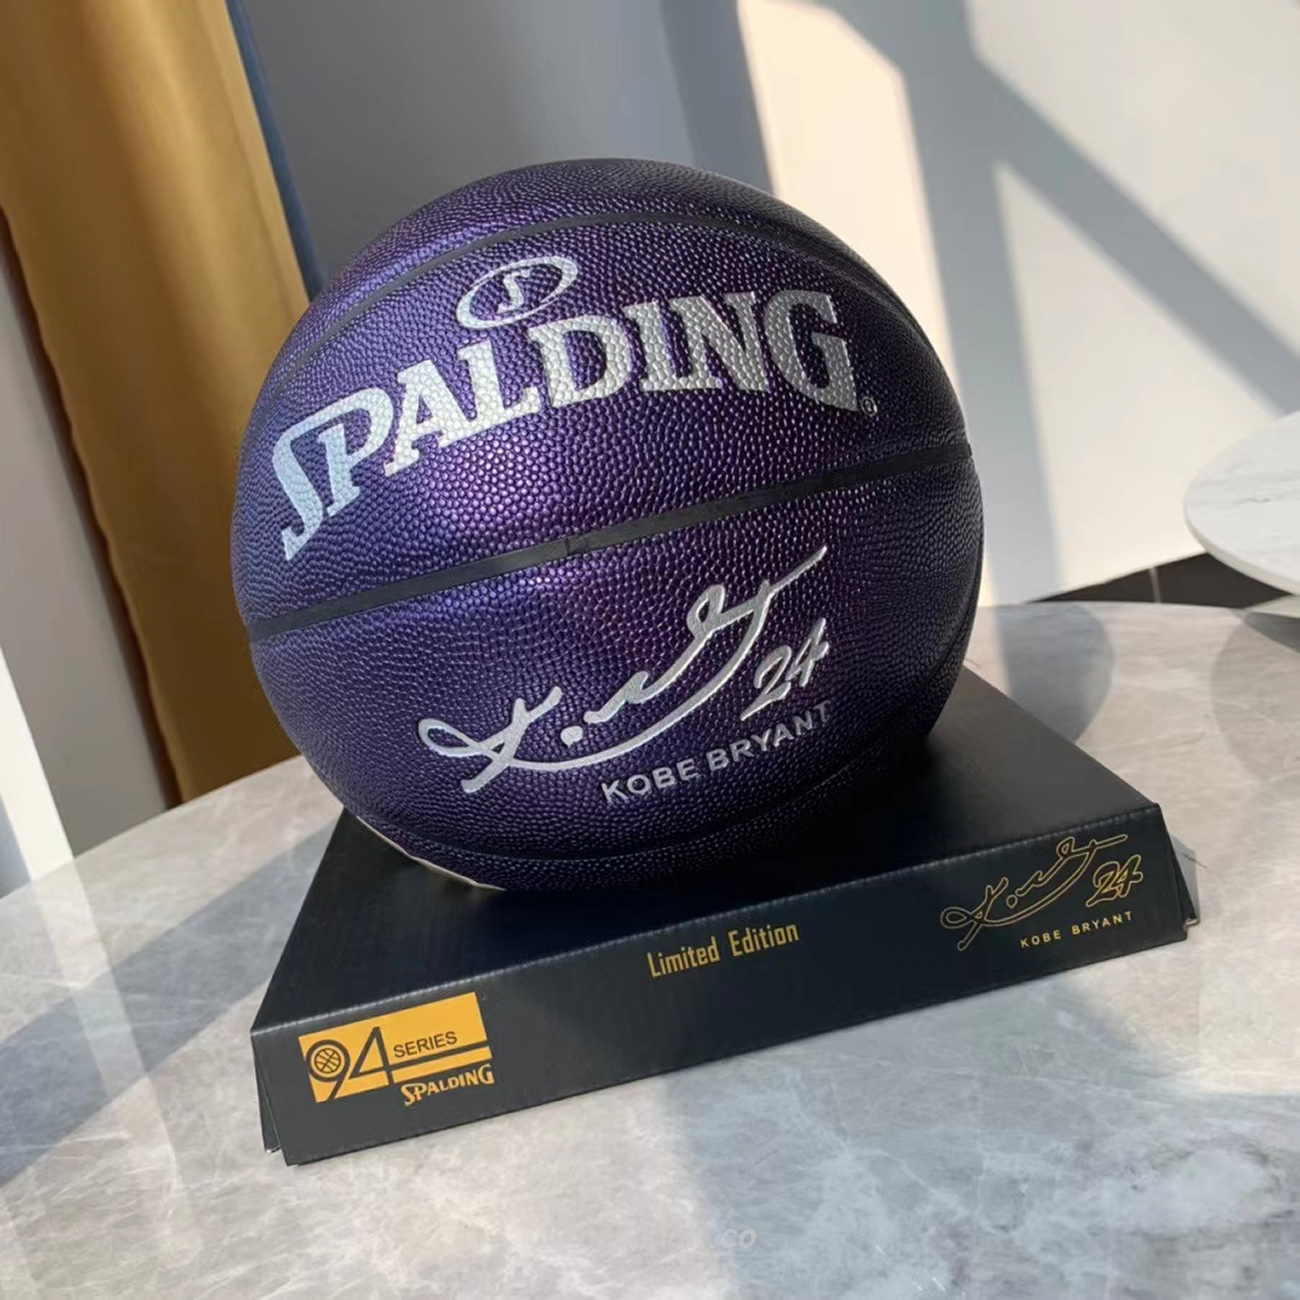 Spalding Kobe Bryant 24k Basketball Black Purple (7) - newkick.org